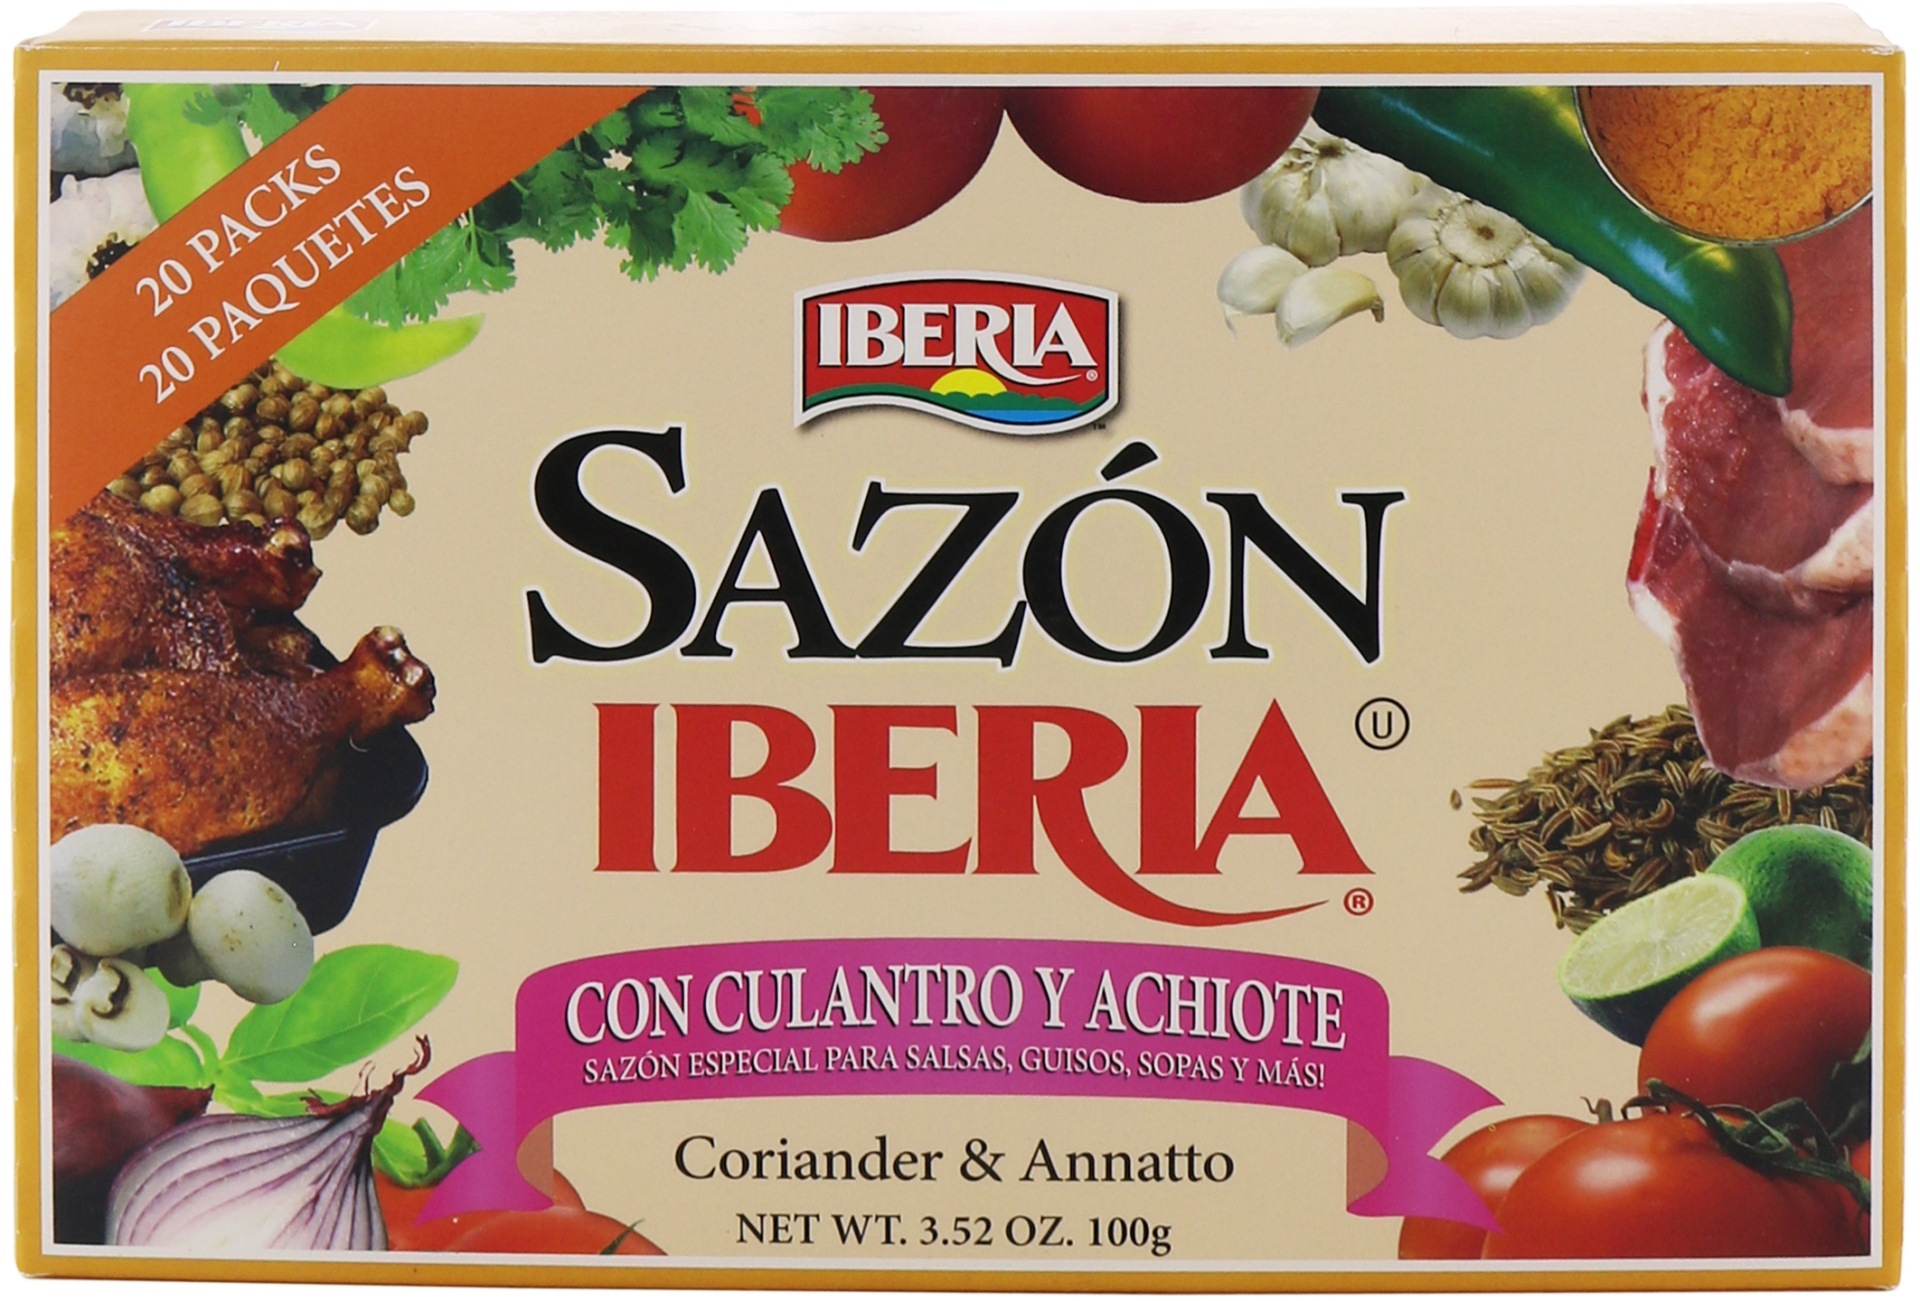 slide 1 of 1, Iberia Sazon with Culantro y Achiote, 3.52 oz